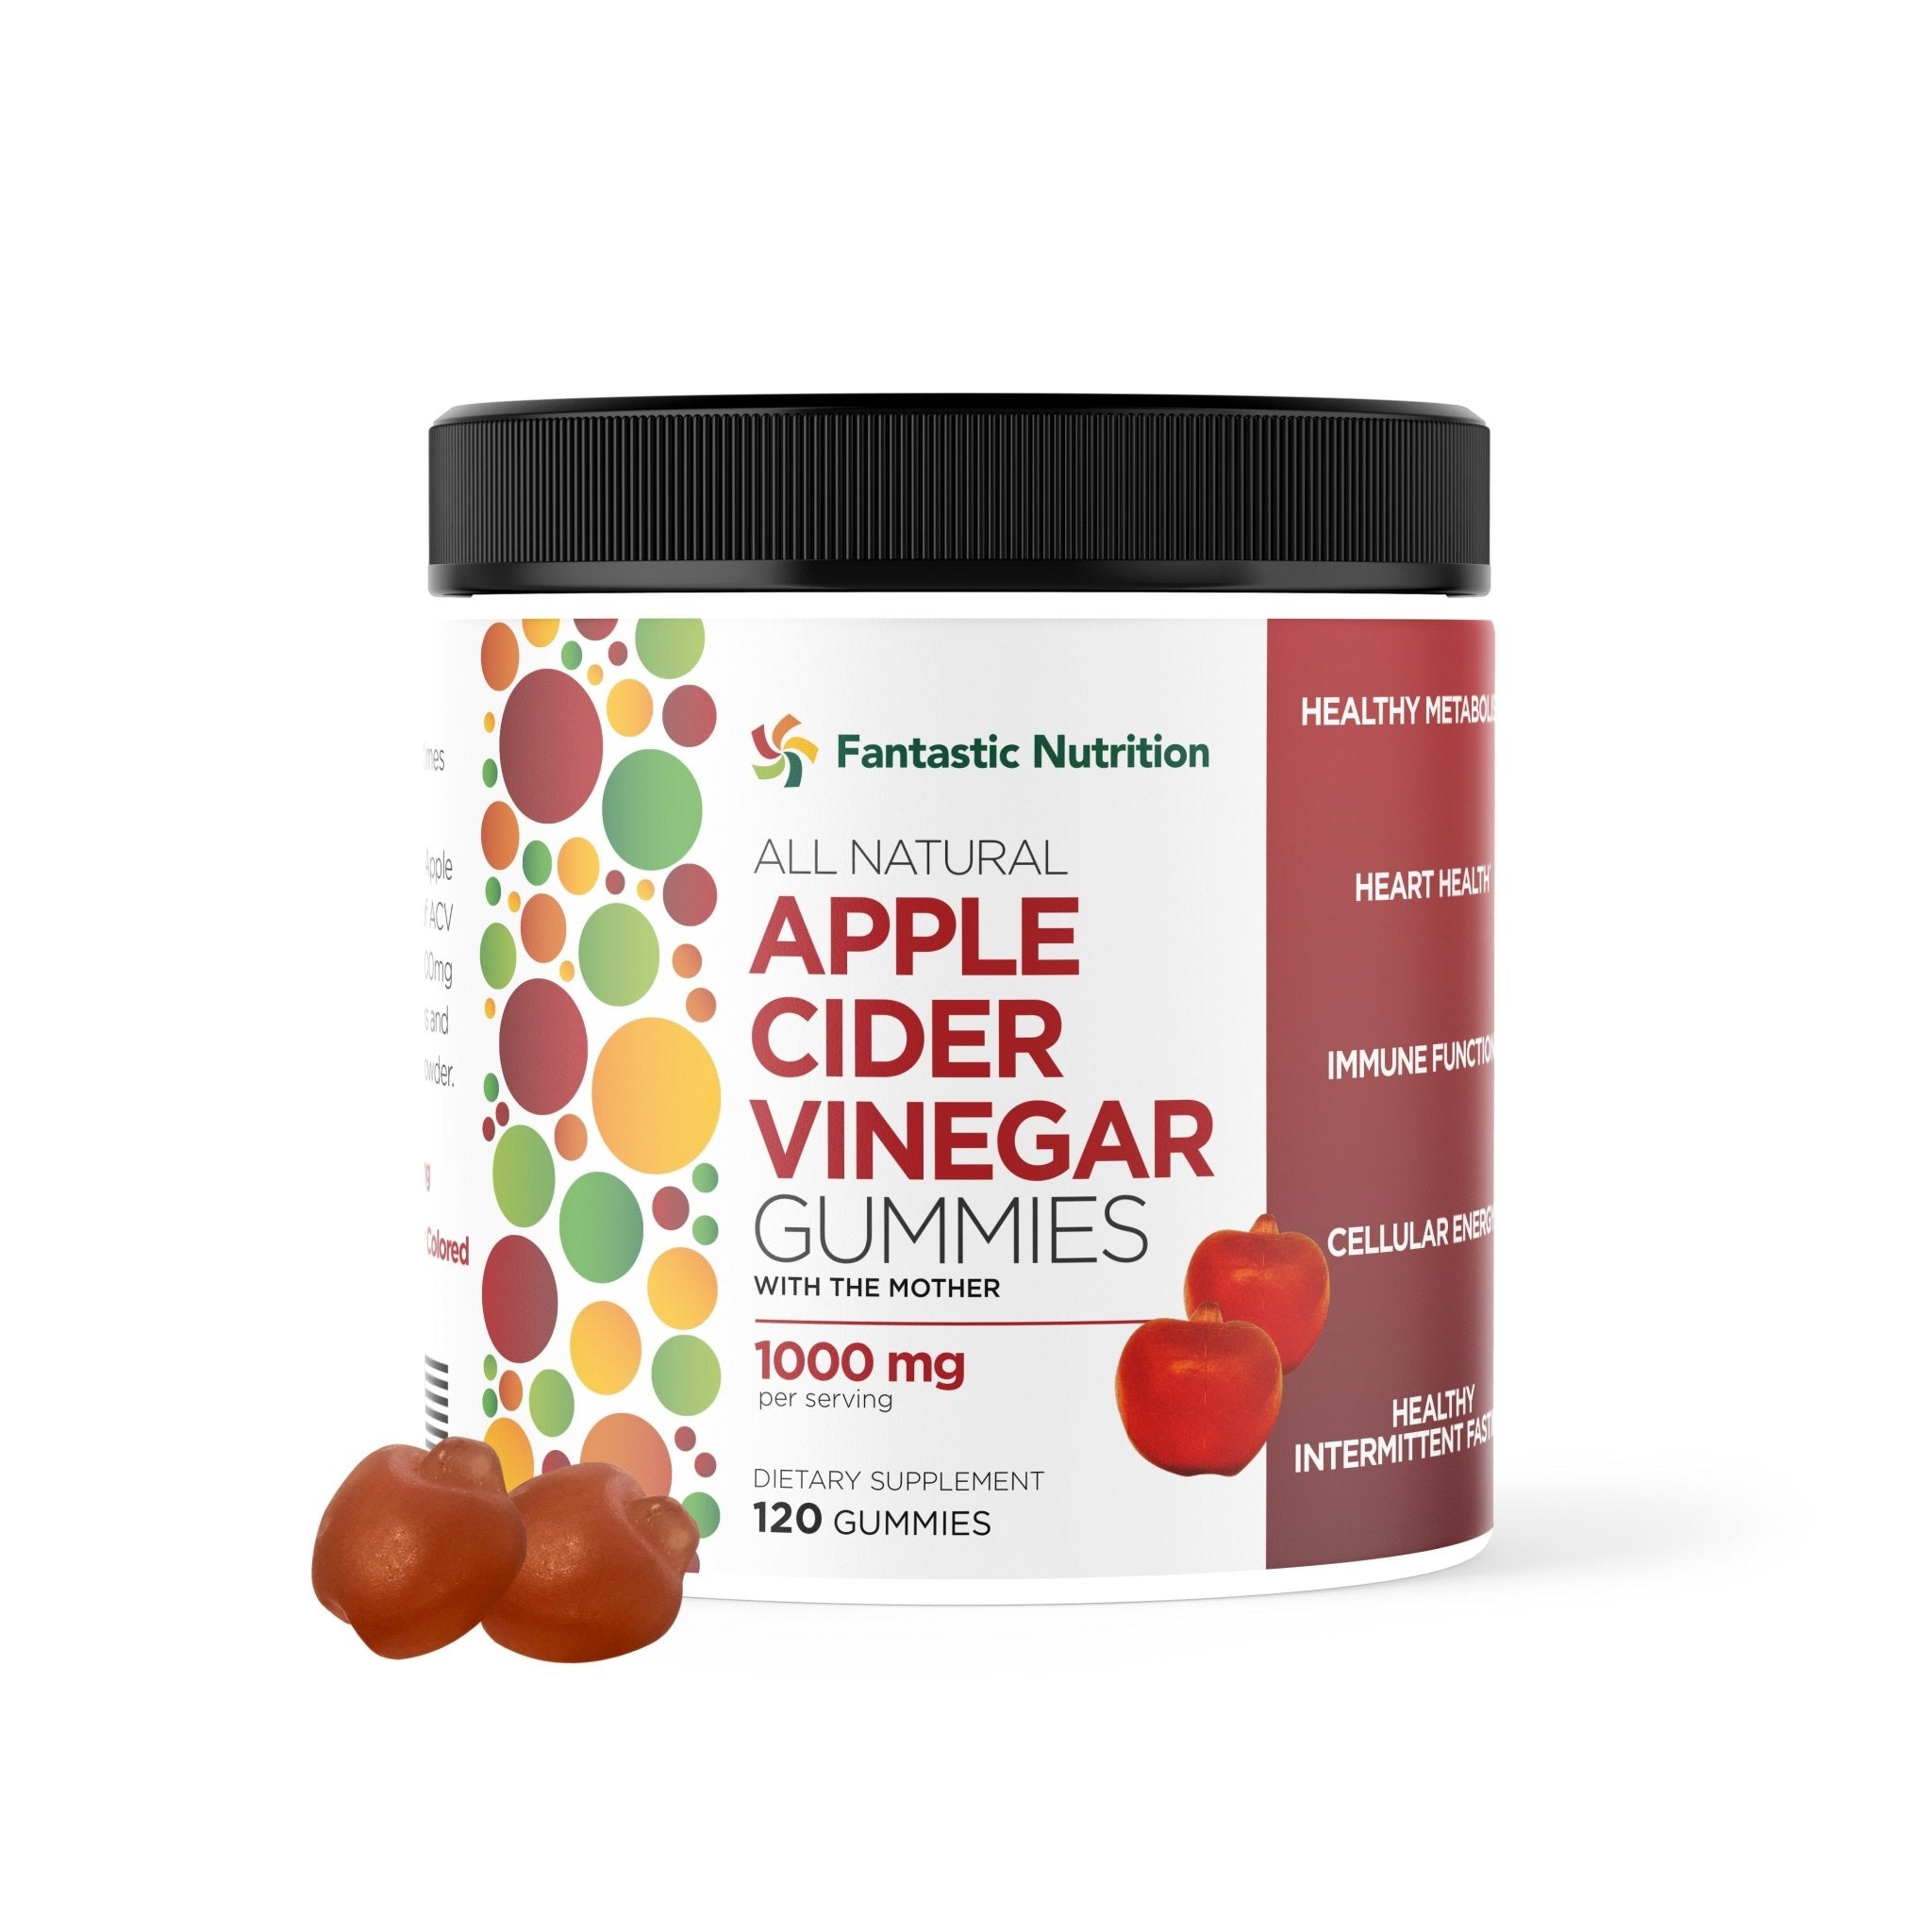 4 Apple Cider Vinegar Gummy Benefits According to a Dietician